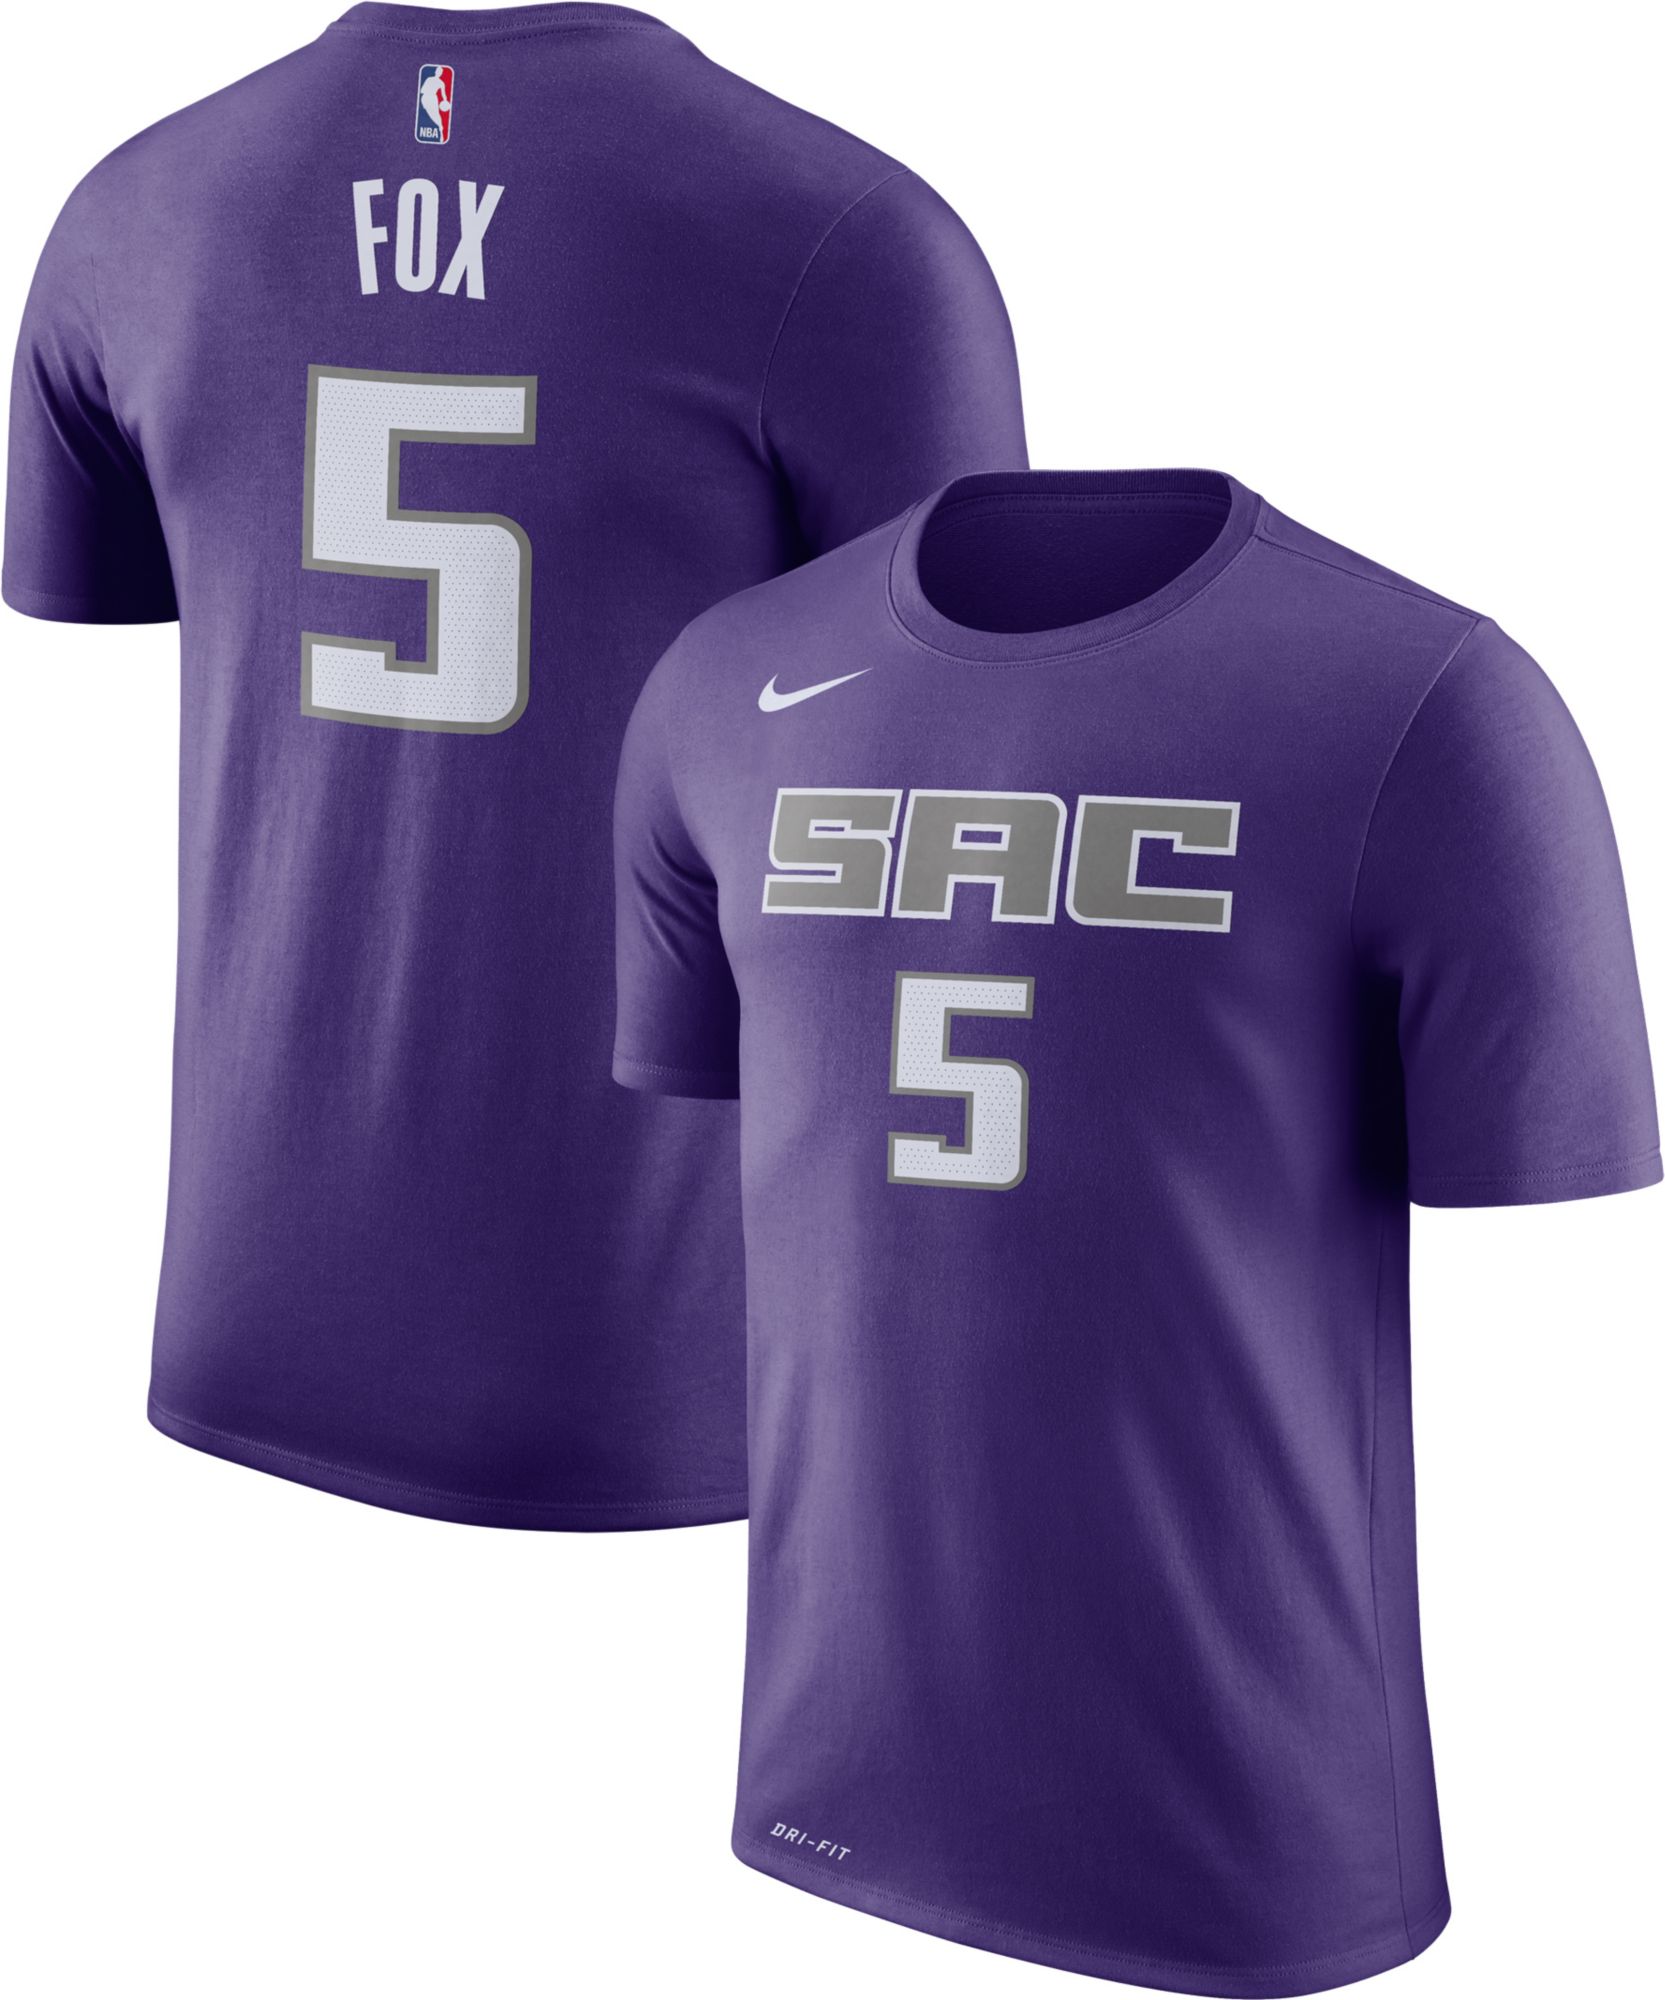 De'Aaron Fox #5 Dri-FIT Purple T-Shirt 